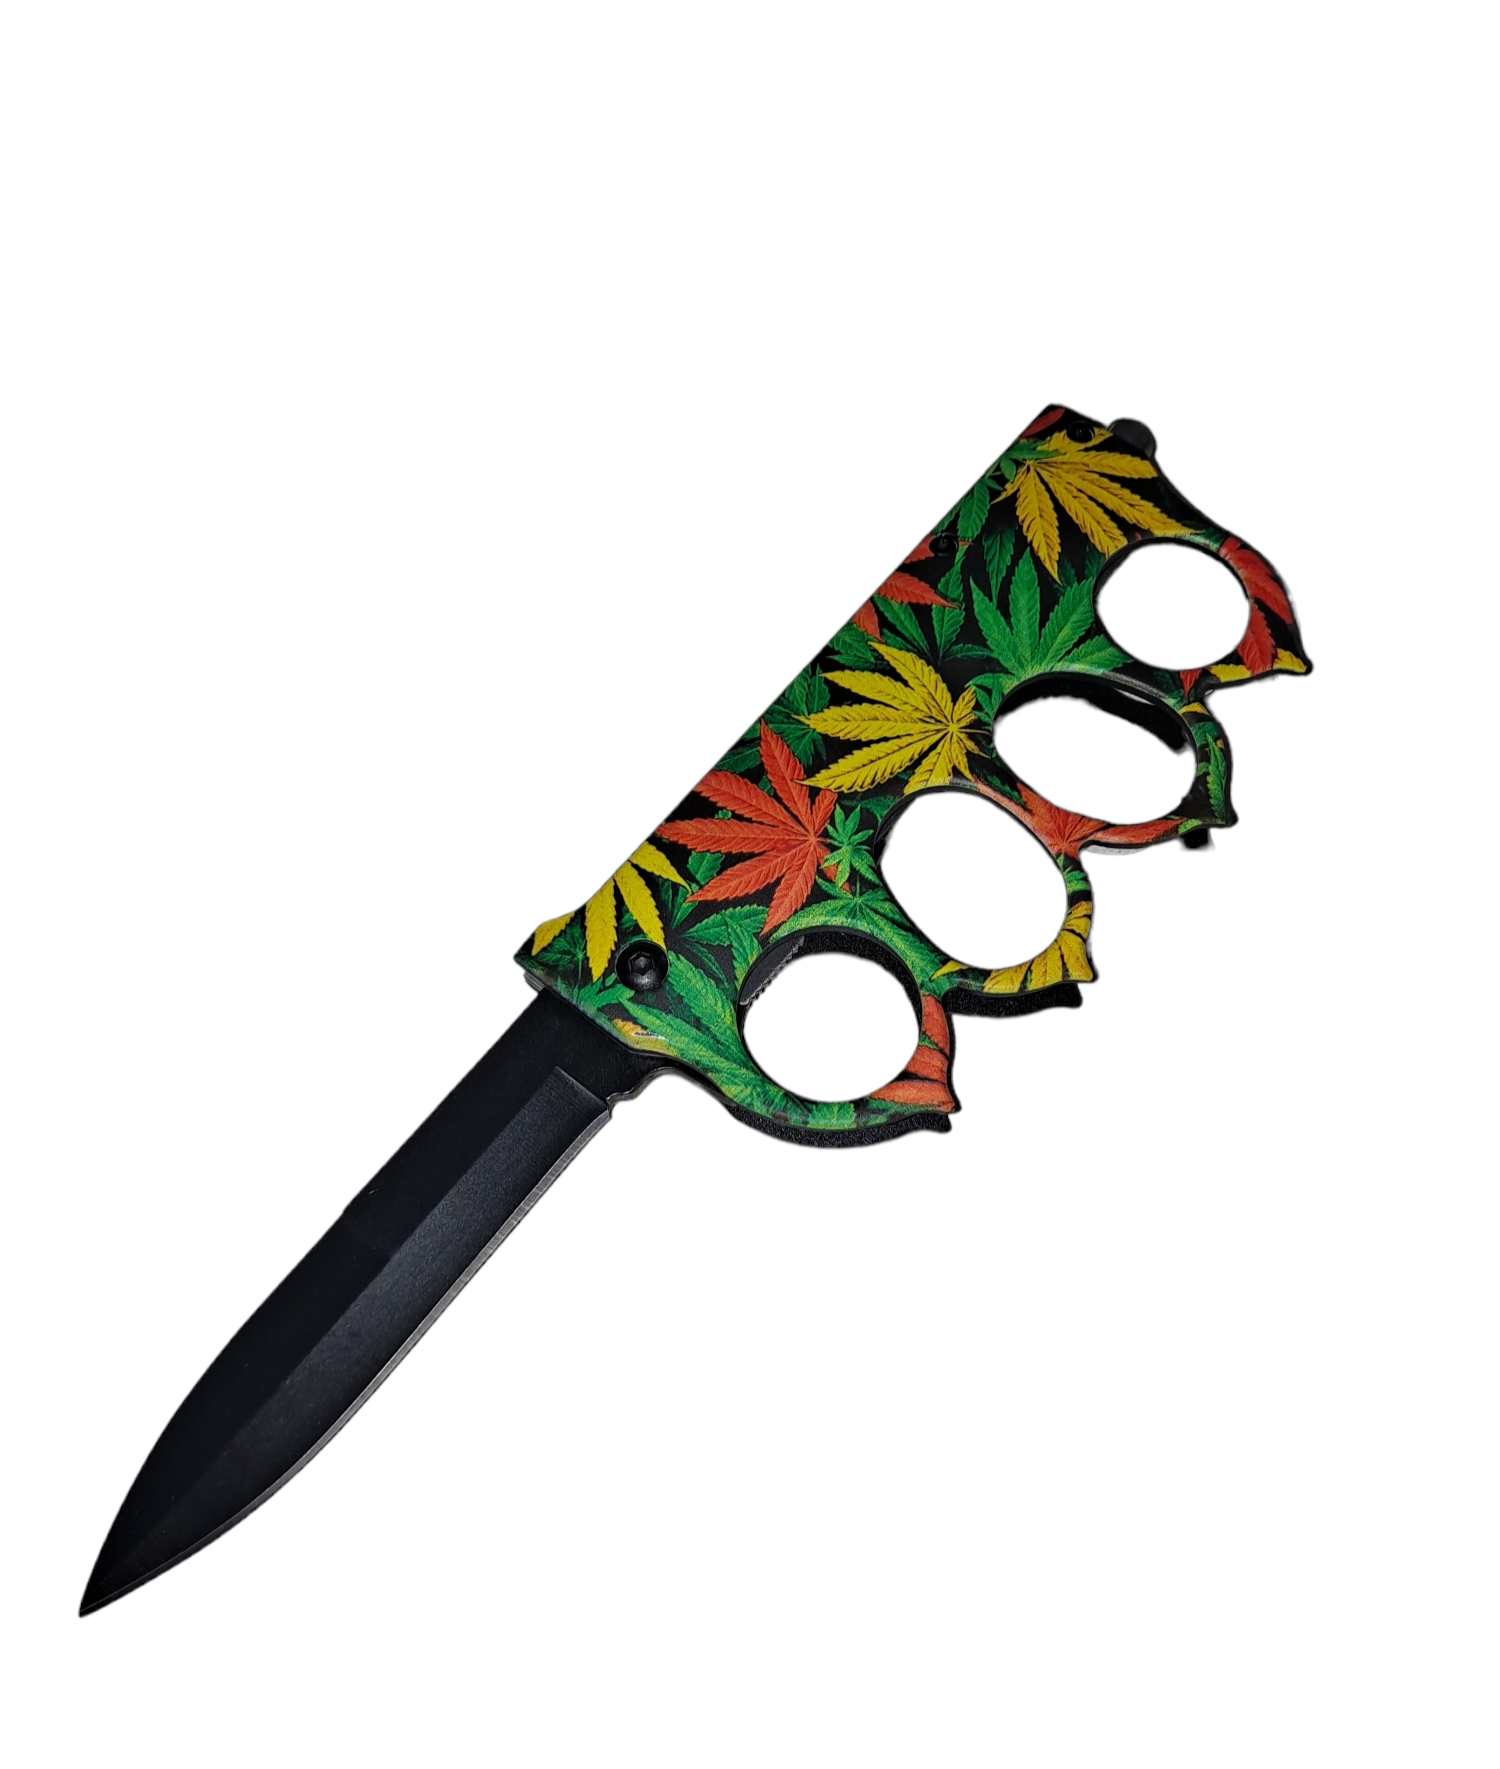 Ninja Throwing Knife Set of 3 Skulls Design Red Orange Green